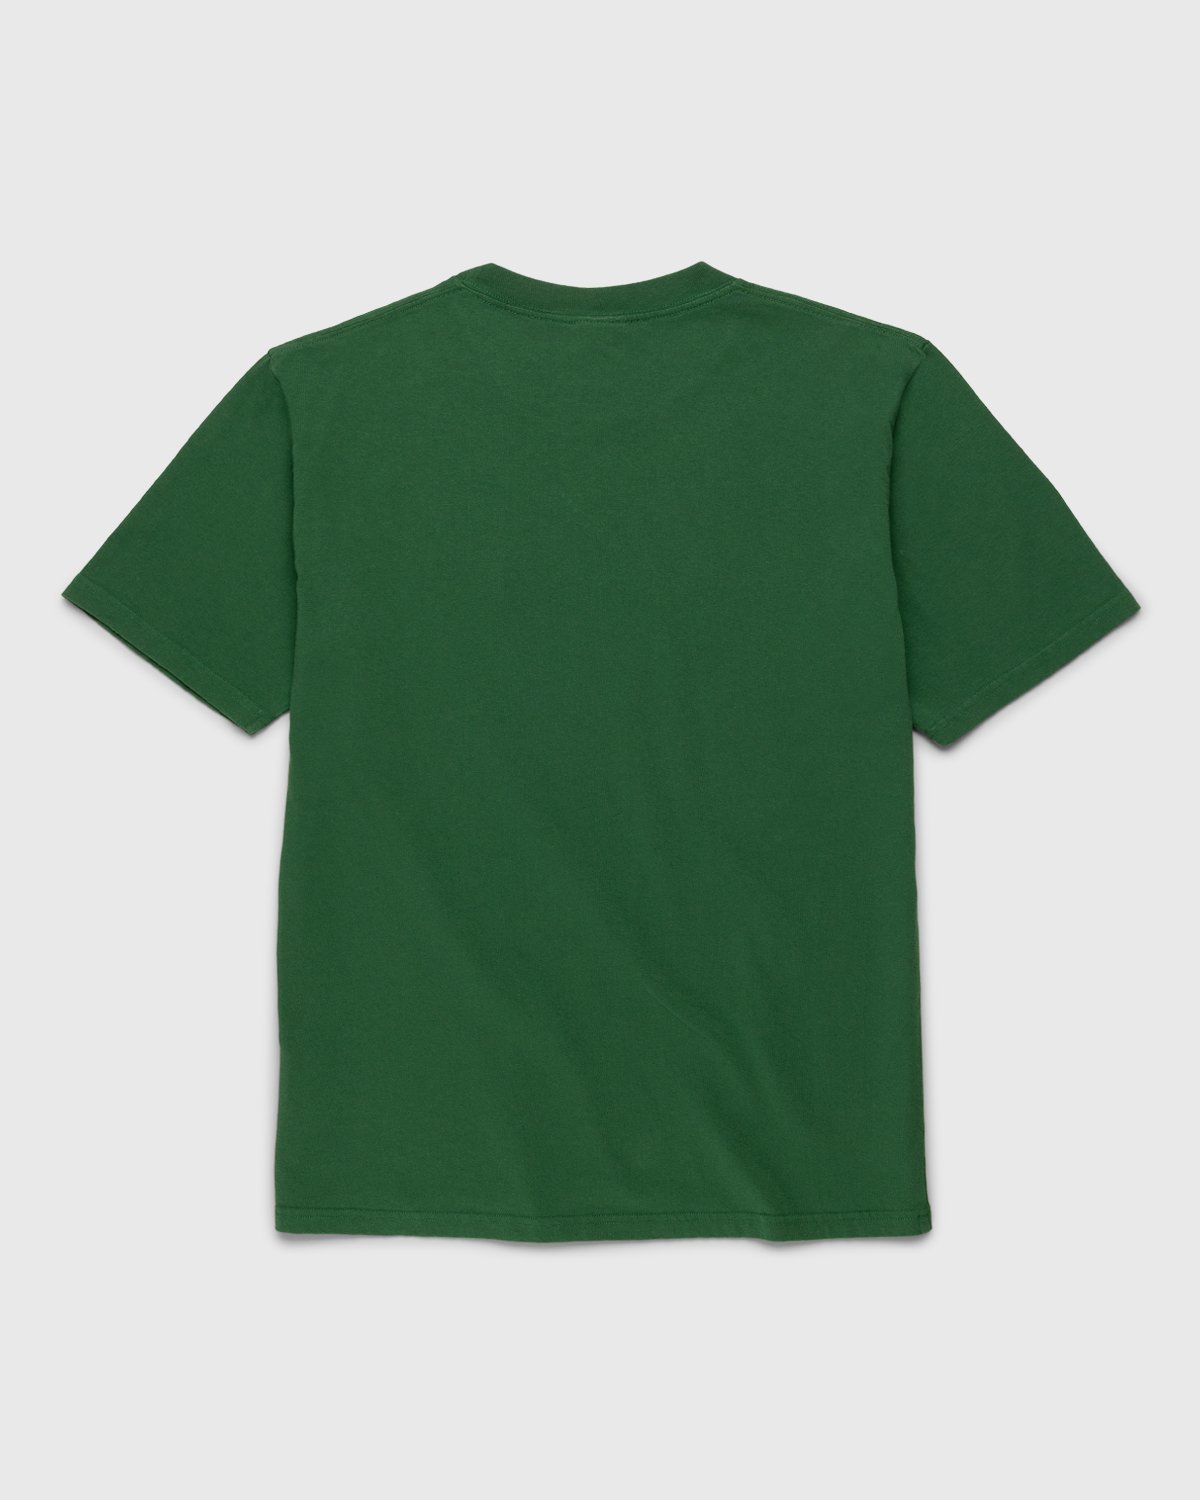 Highsnobiety - Staples T-Shirt Lush Green - Clothing - Green - Image 2